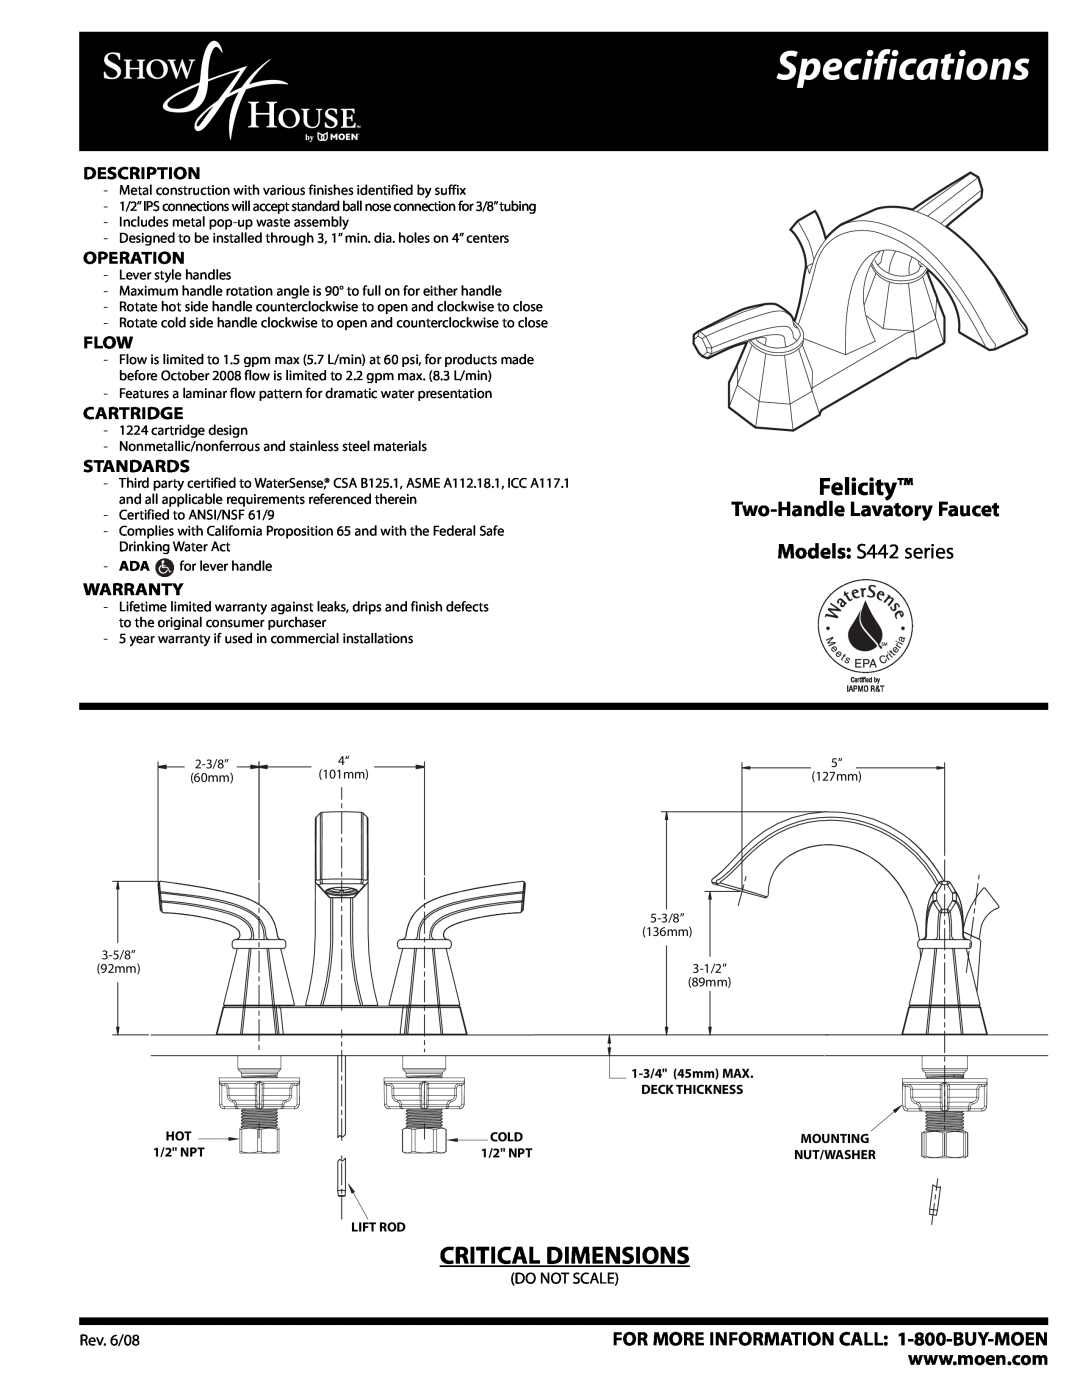 Moen S442 series specifications Specifications, Felicity, Critical Dimensions, Two-Handle Lavatory Faucet, Description 